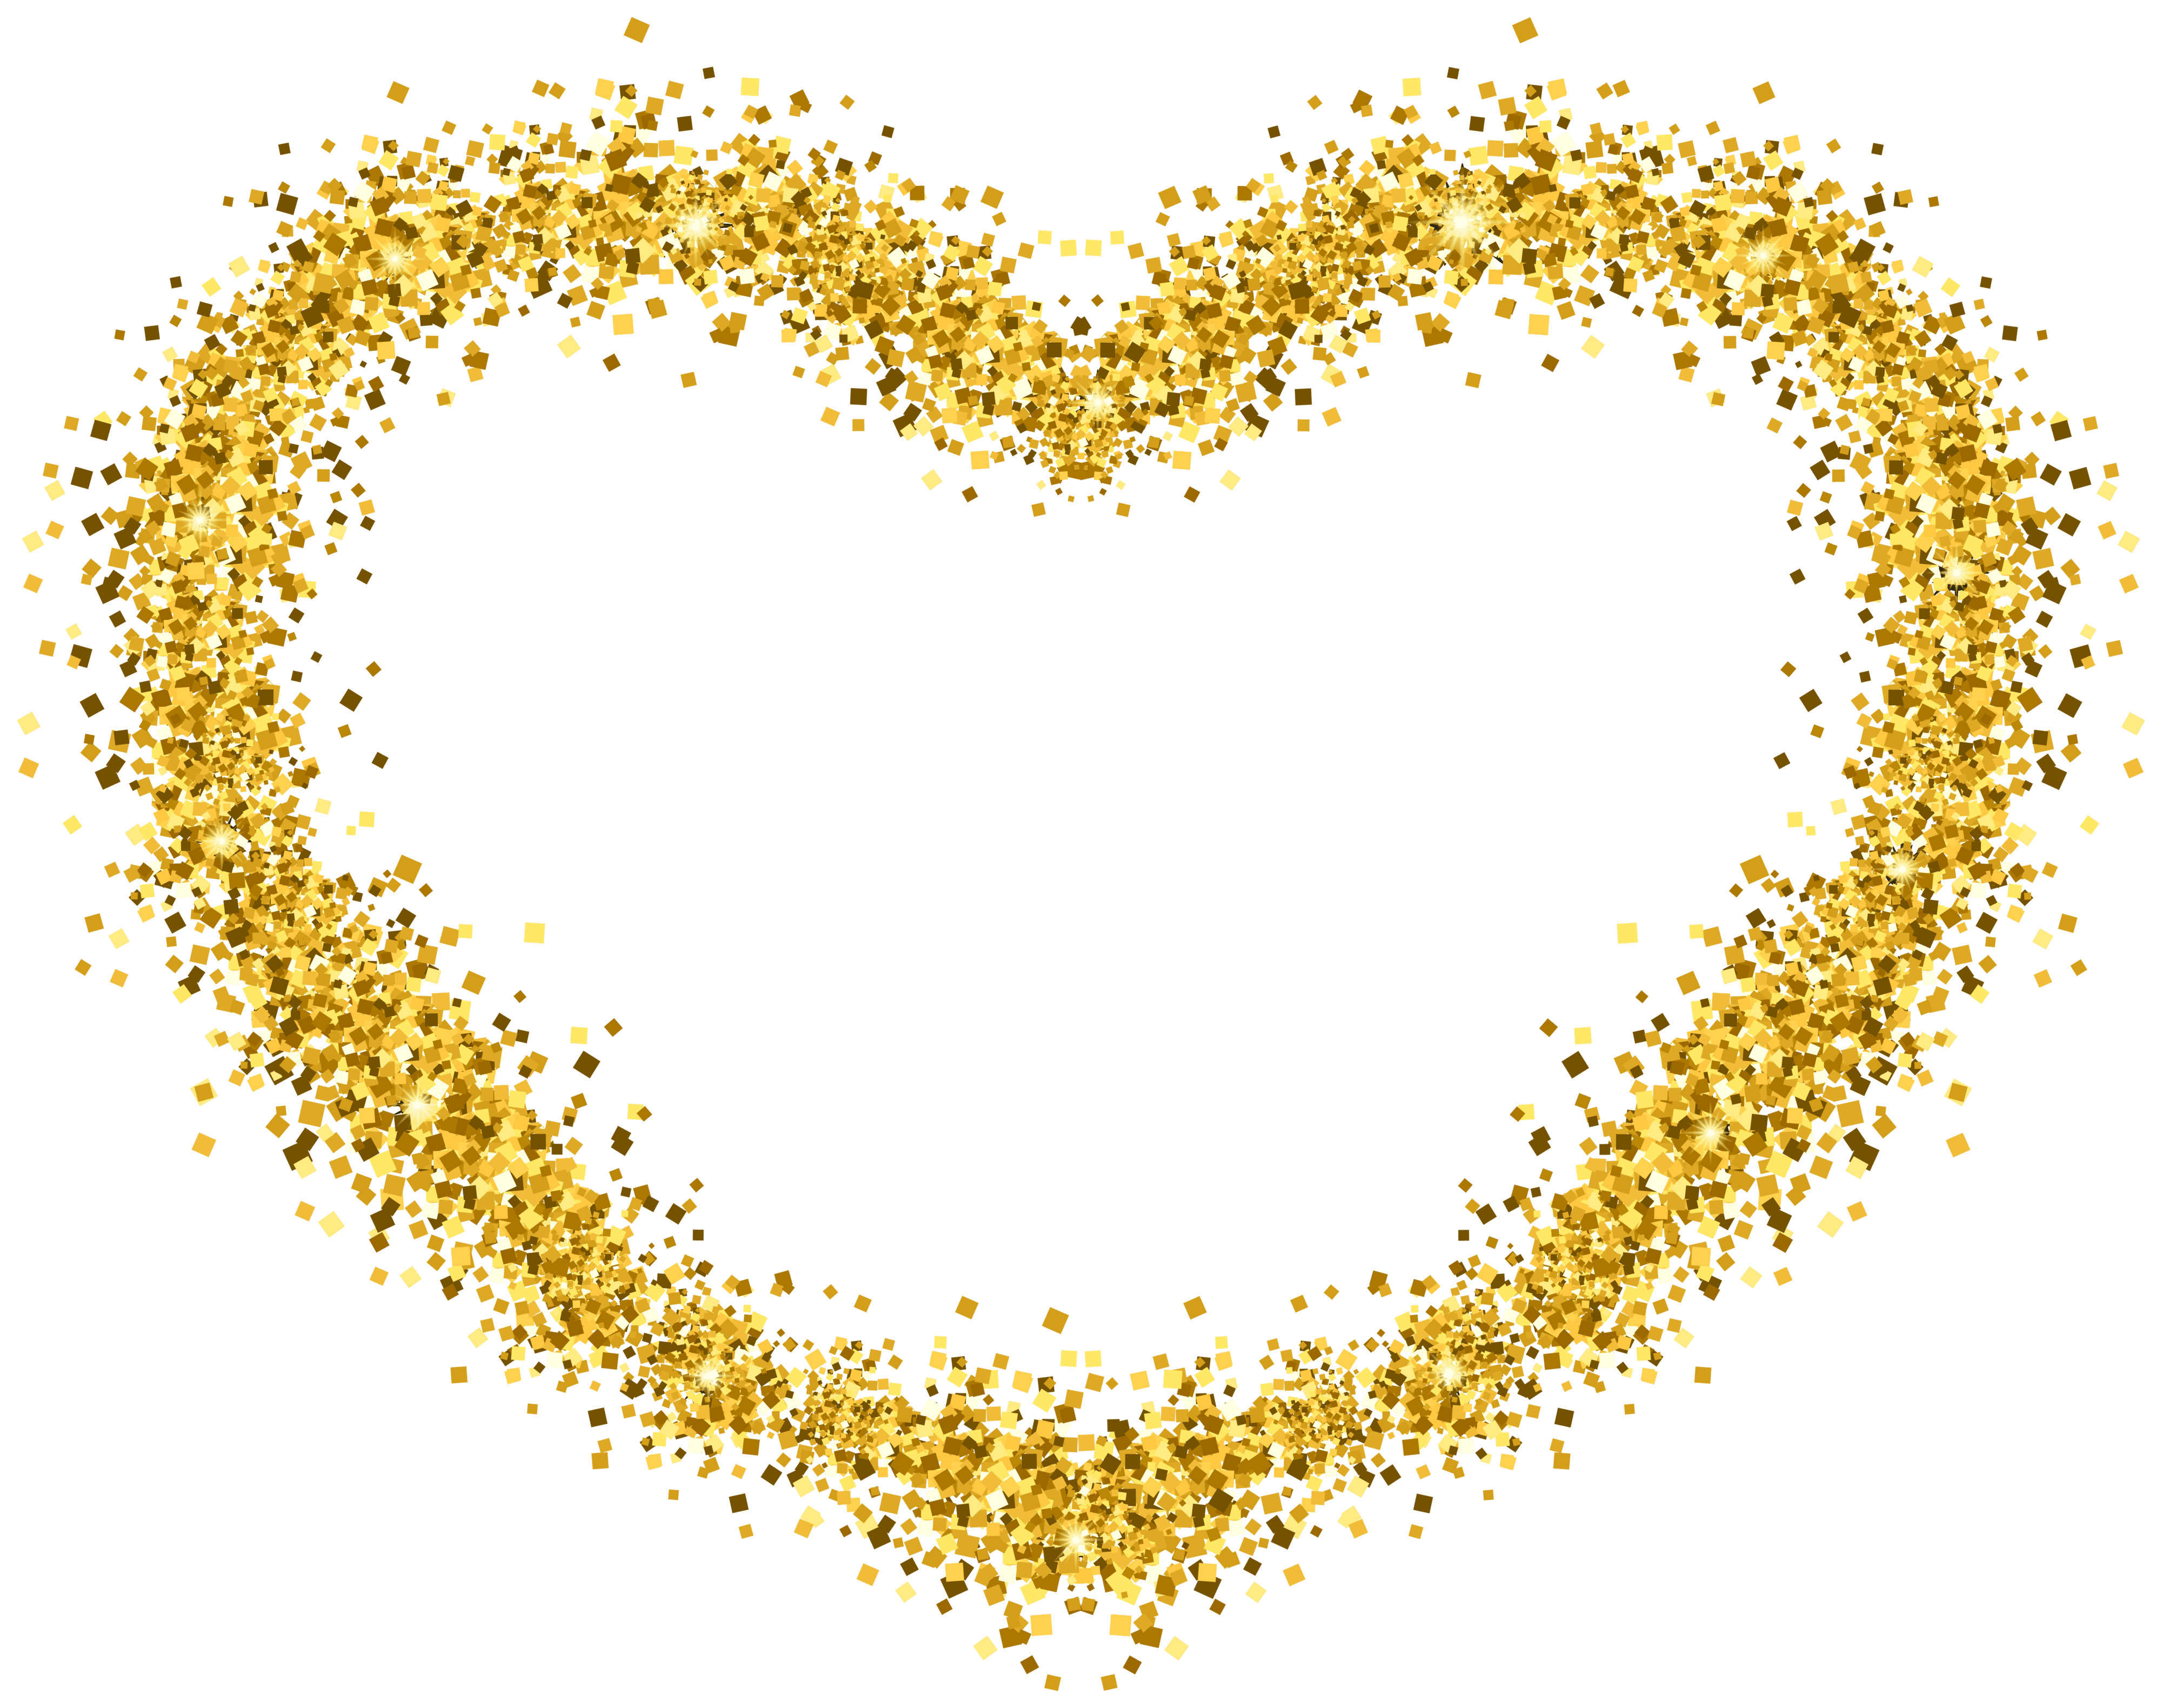 Decorative Gold Heart Transparent Image